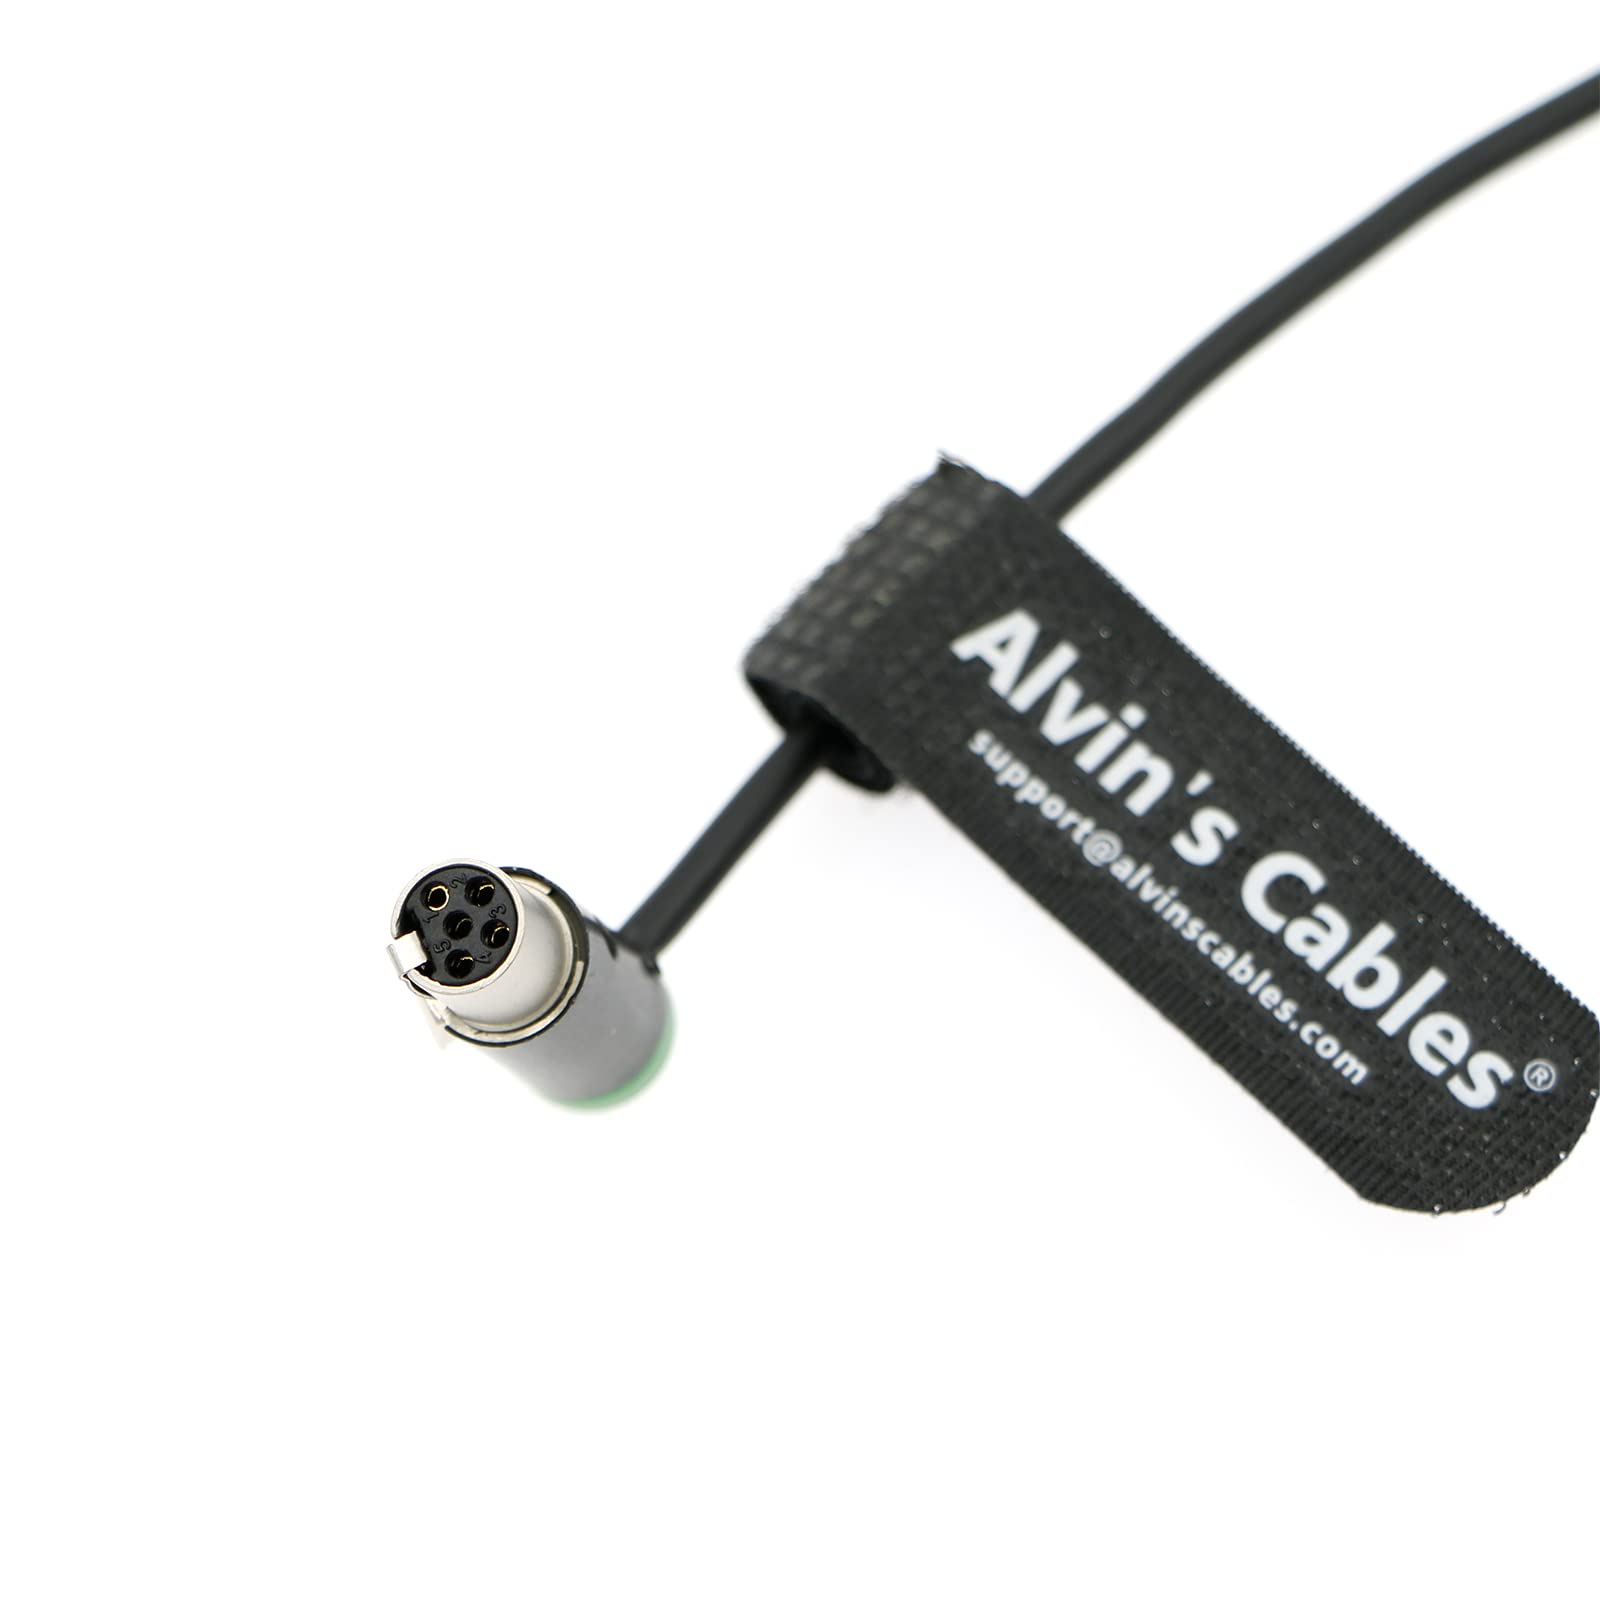 Alvin's Cables Low-Profile TA5F auf Dual LP XLR 3 Pin Male Audio-Kabel für Wisycom-MCR54| Lectrosonics-DCHR-Receiver LP Mini-XLR-5-Pin-Buchse auf zwei XLR-Ausgangs-Splitterkabel für Audiogeräte